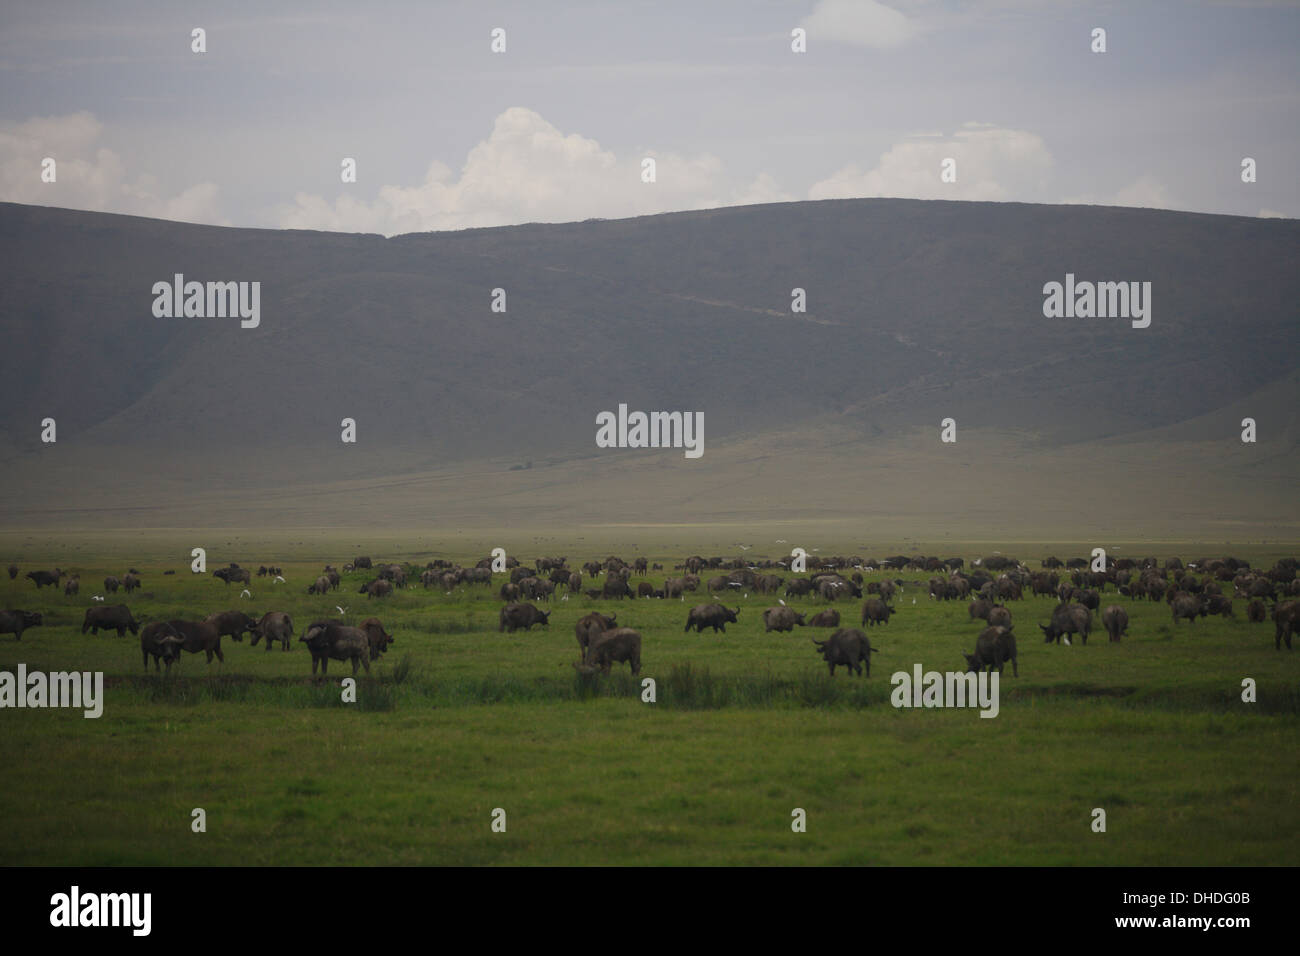 Cape Buffalo in Ngorongoro Crater. Tanzania, Africa. Stock Photo